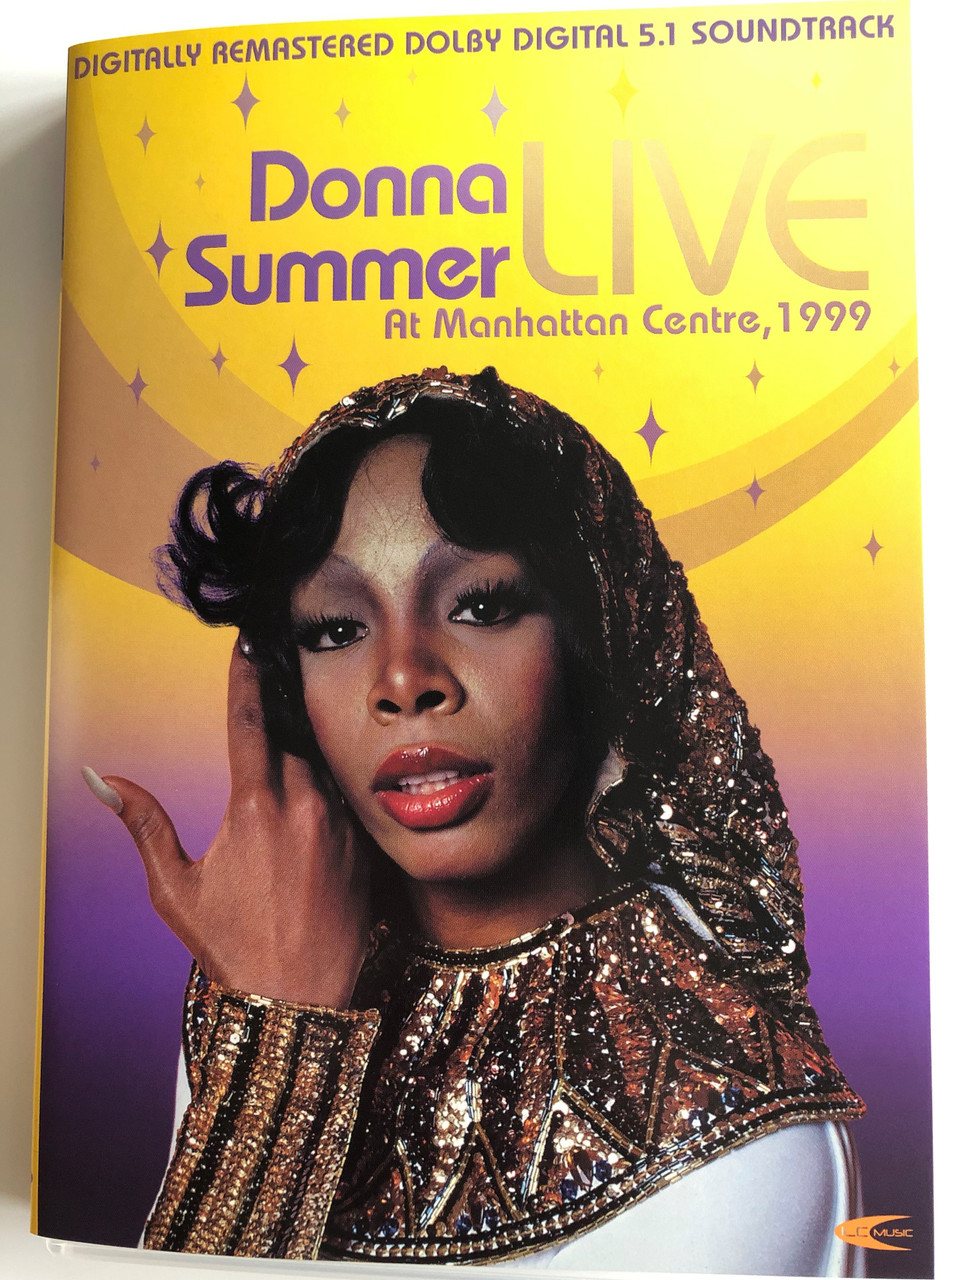 Donna Summer LIVE DVD 2004 Live at Manhattan Centre 1999 / Directed by  Michael Chloe / Digitally Remastered 5.1 Soundtrack / ILC Music -  bibleinmylanguage